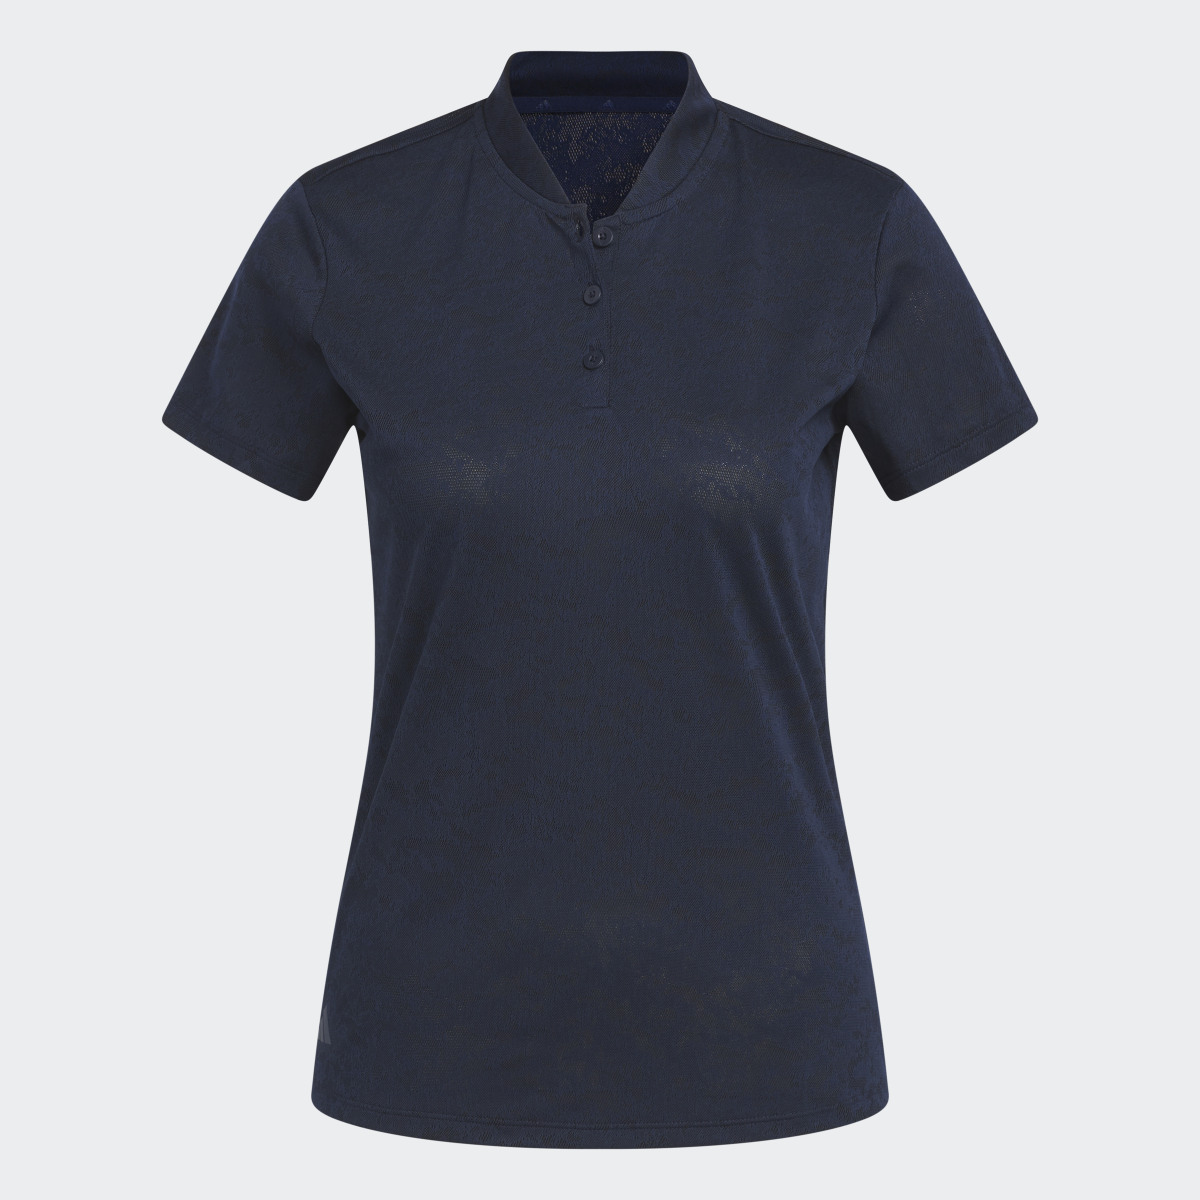 Adidas Jacquard Golf Polo Shirt. 6